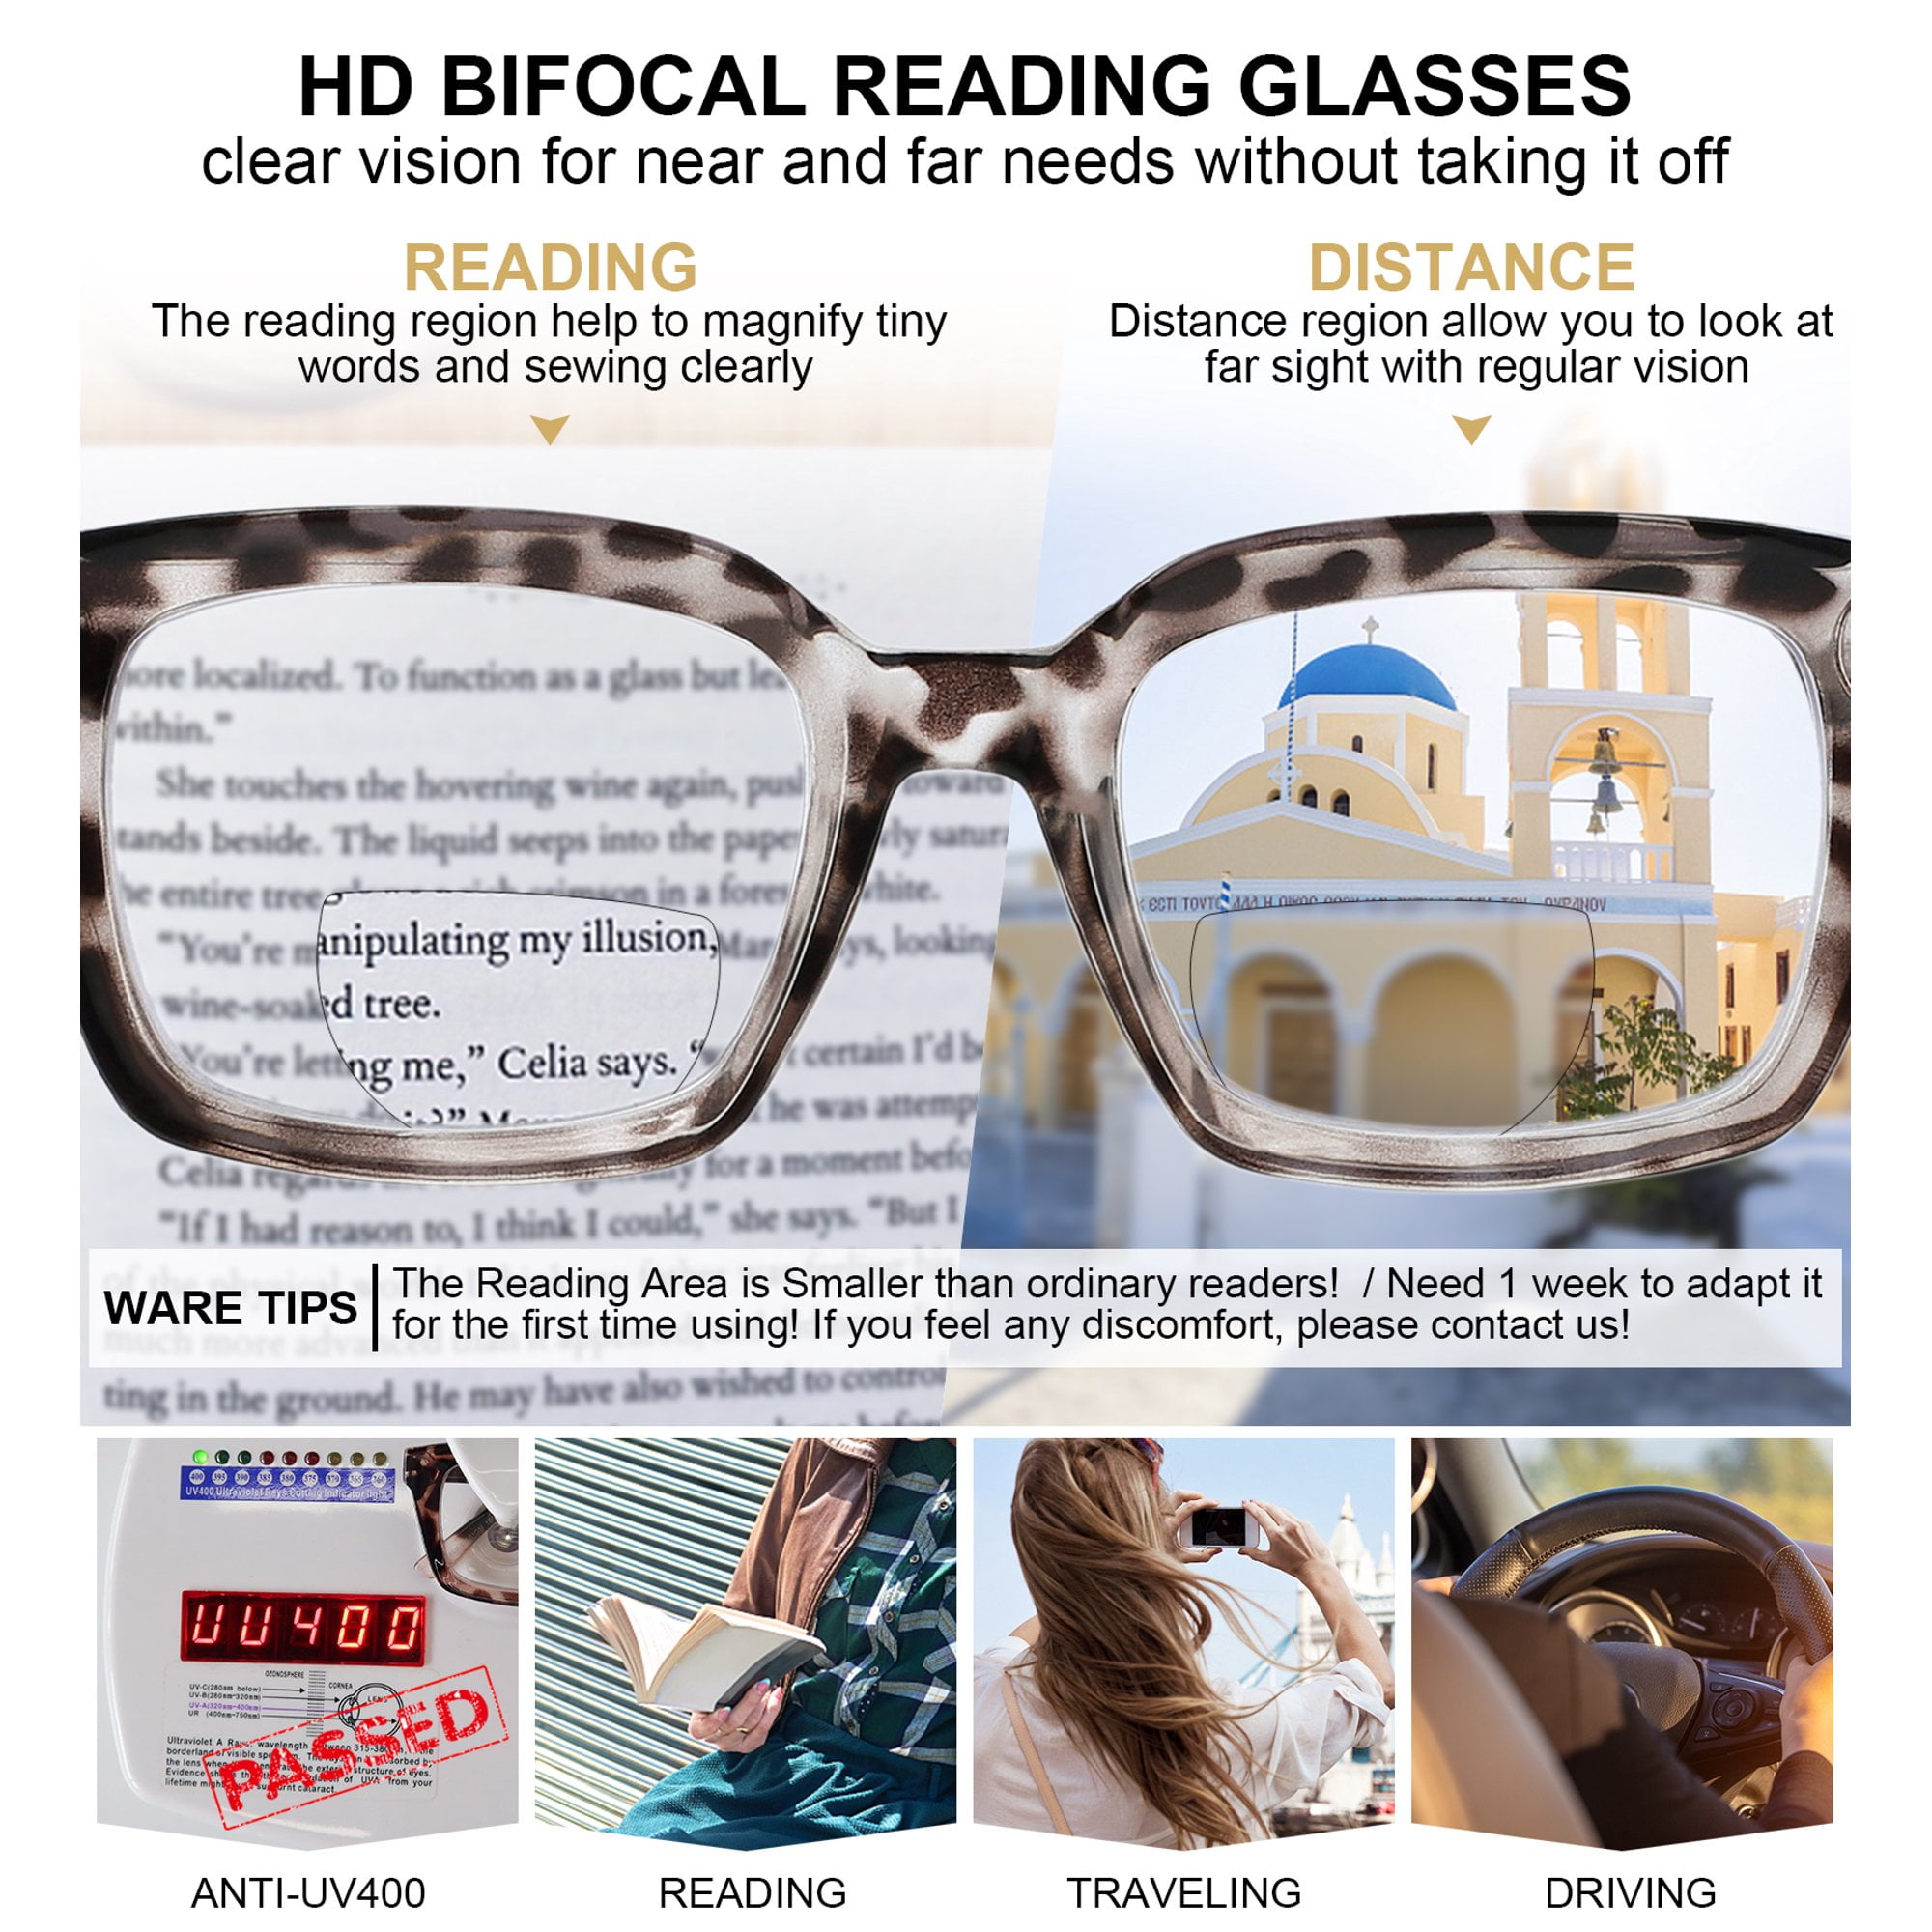 Cubojue Sport Reading Glasses – FuzWeb